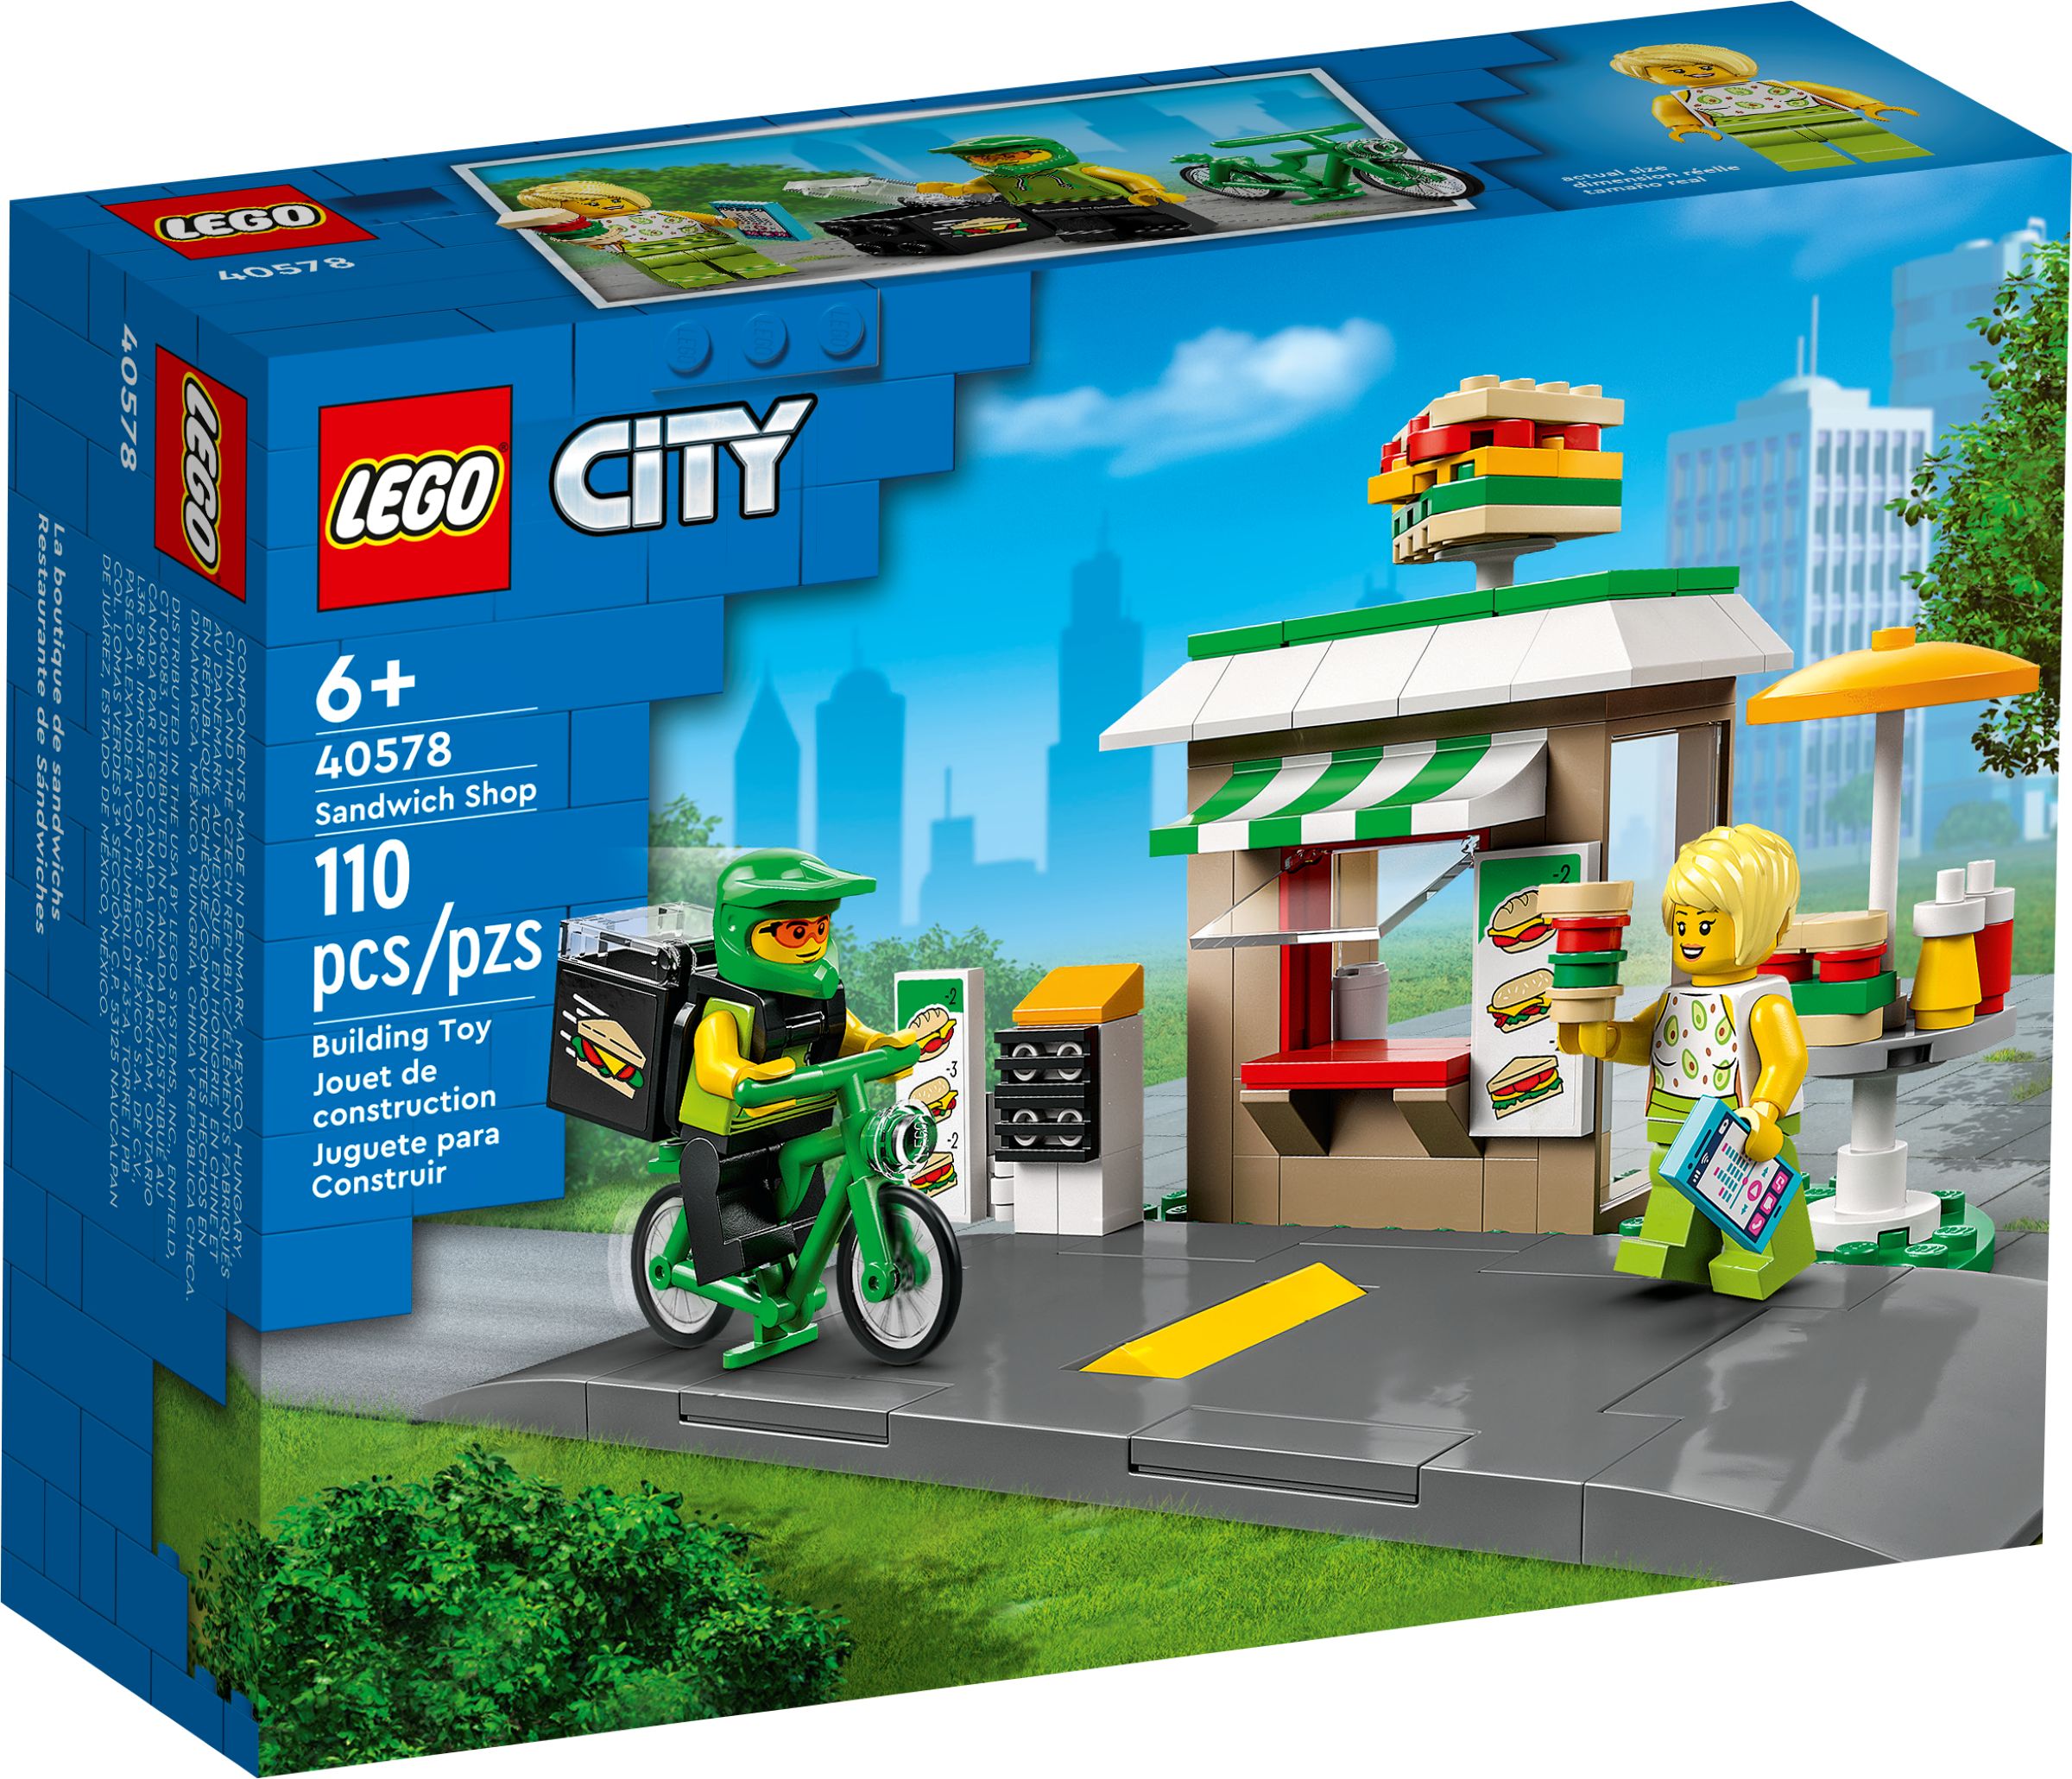 LEGO Promotional 40578 Sandwichladen LEGO_40578_alt1.jpg